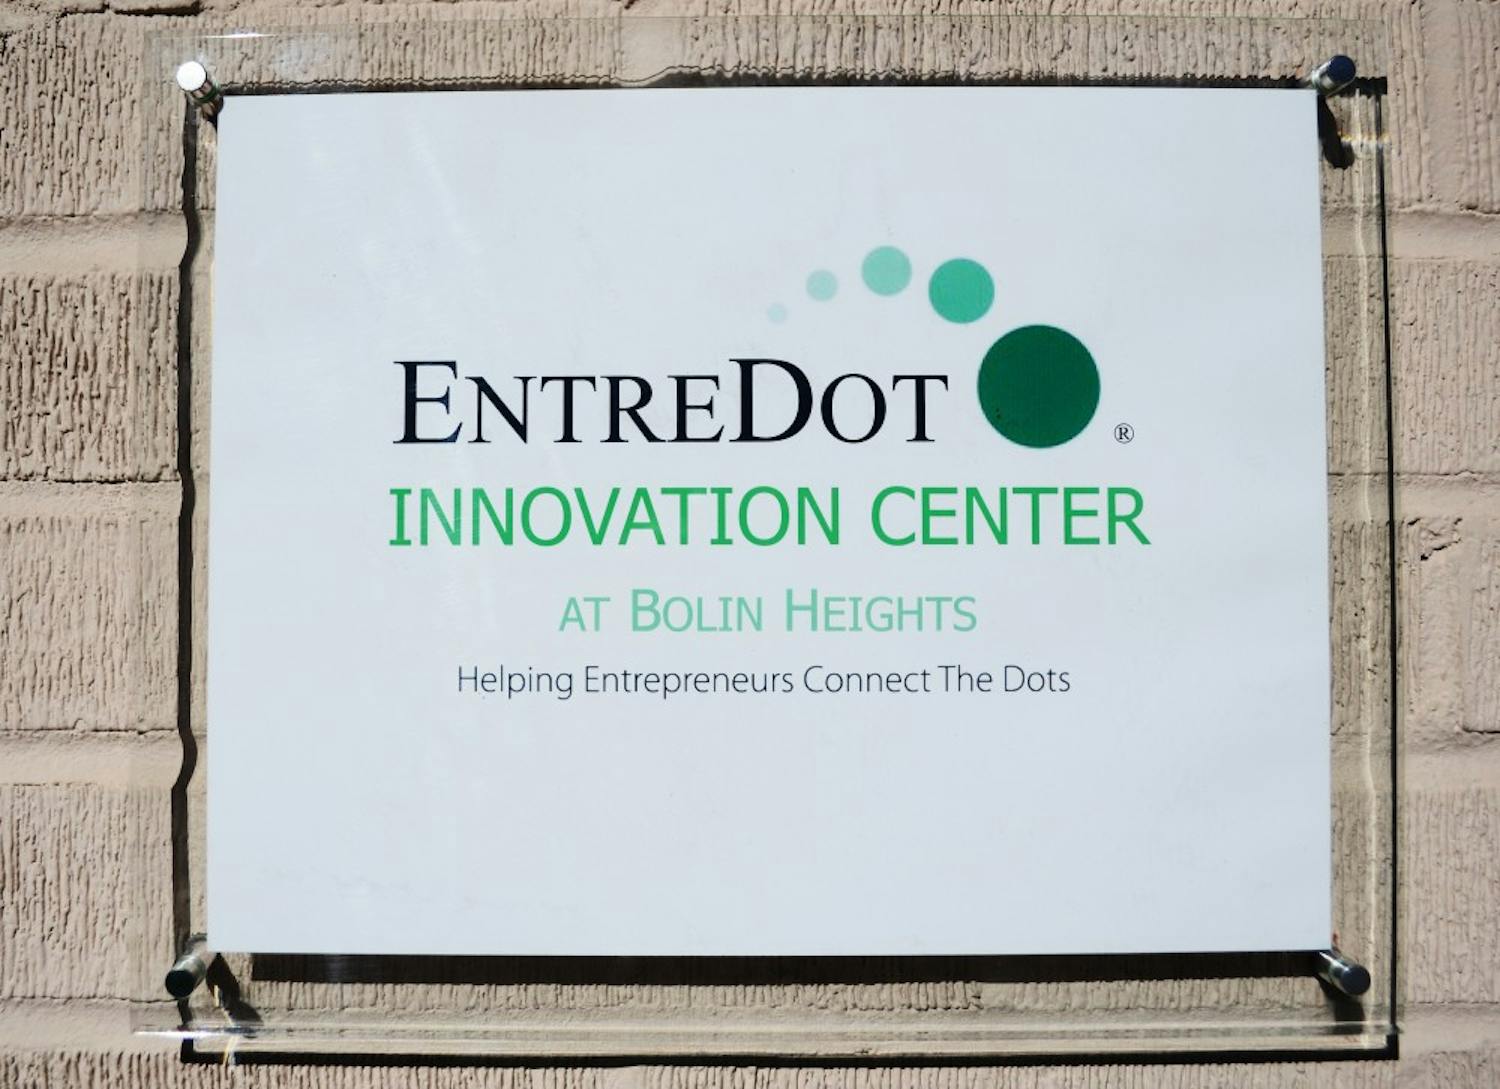 EntreDot Business incubator  